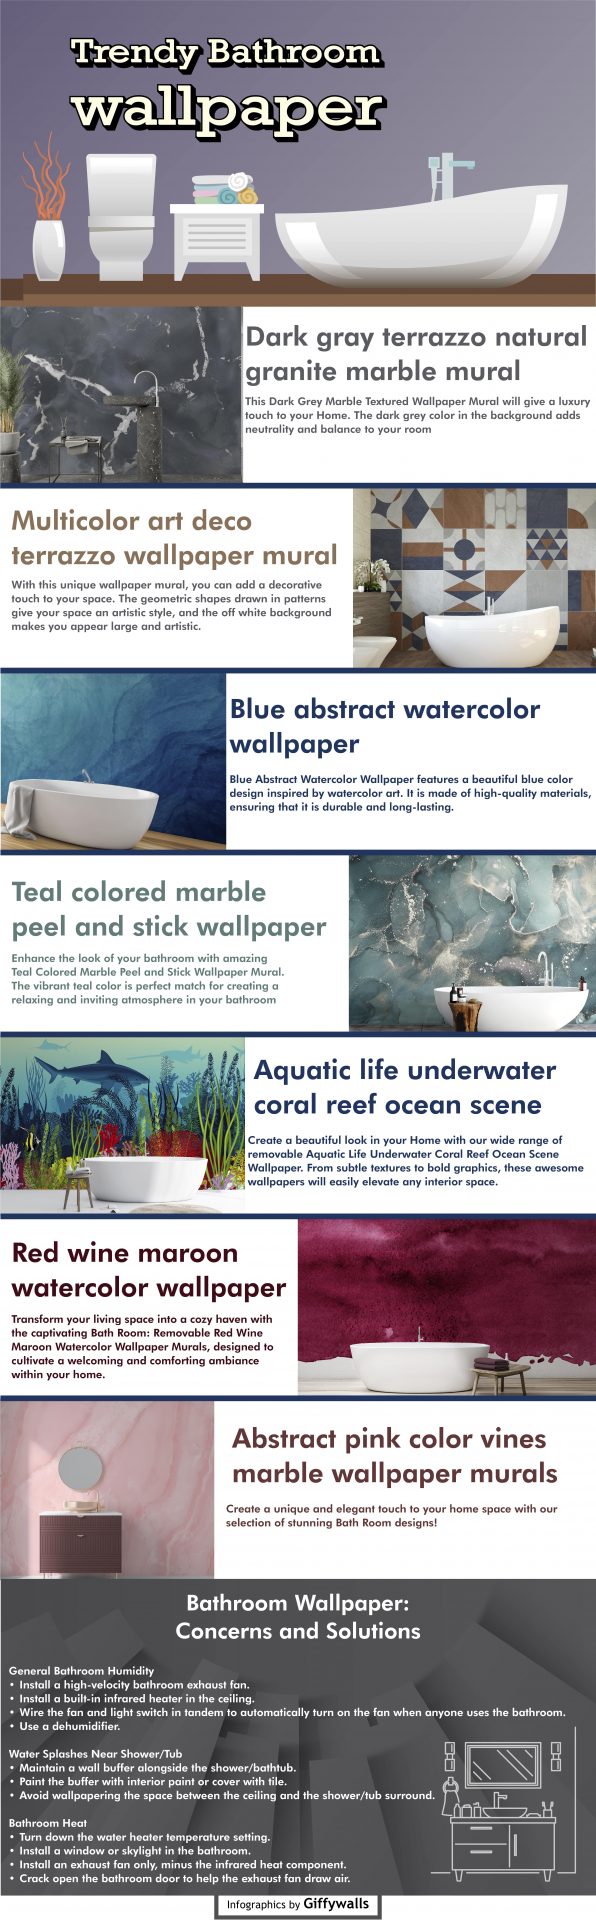 Trending Bathroom Infographics